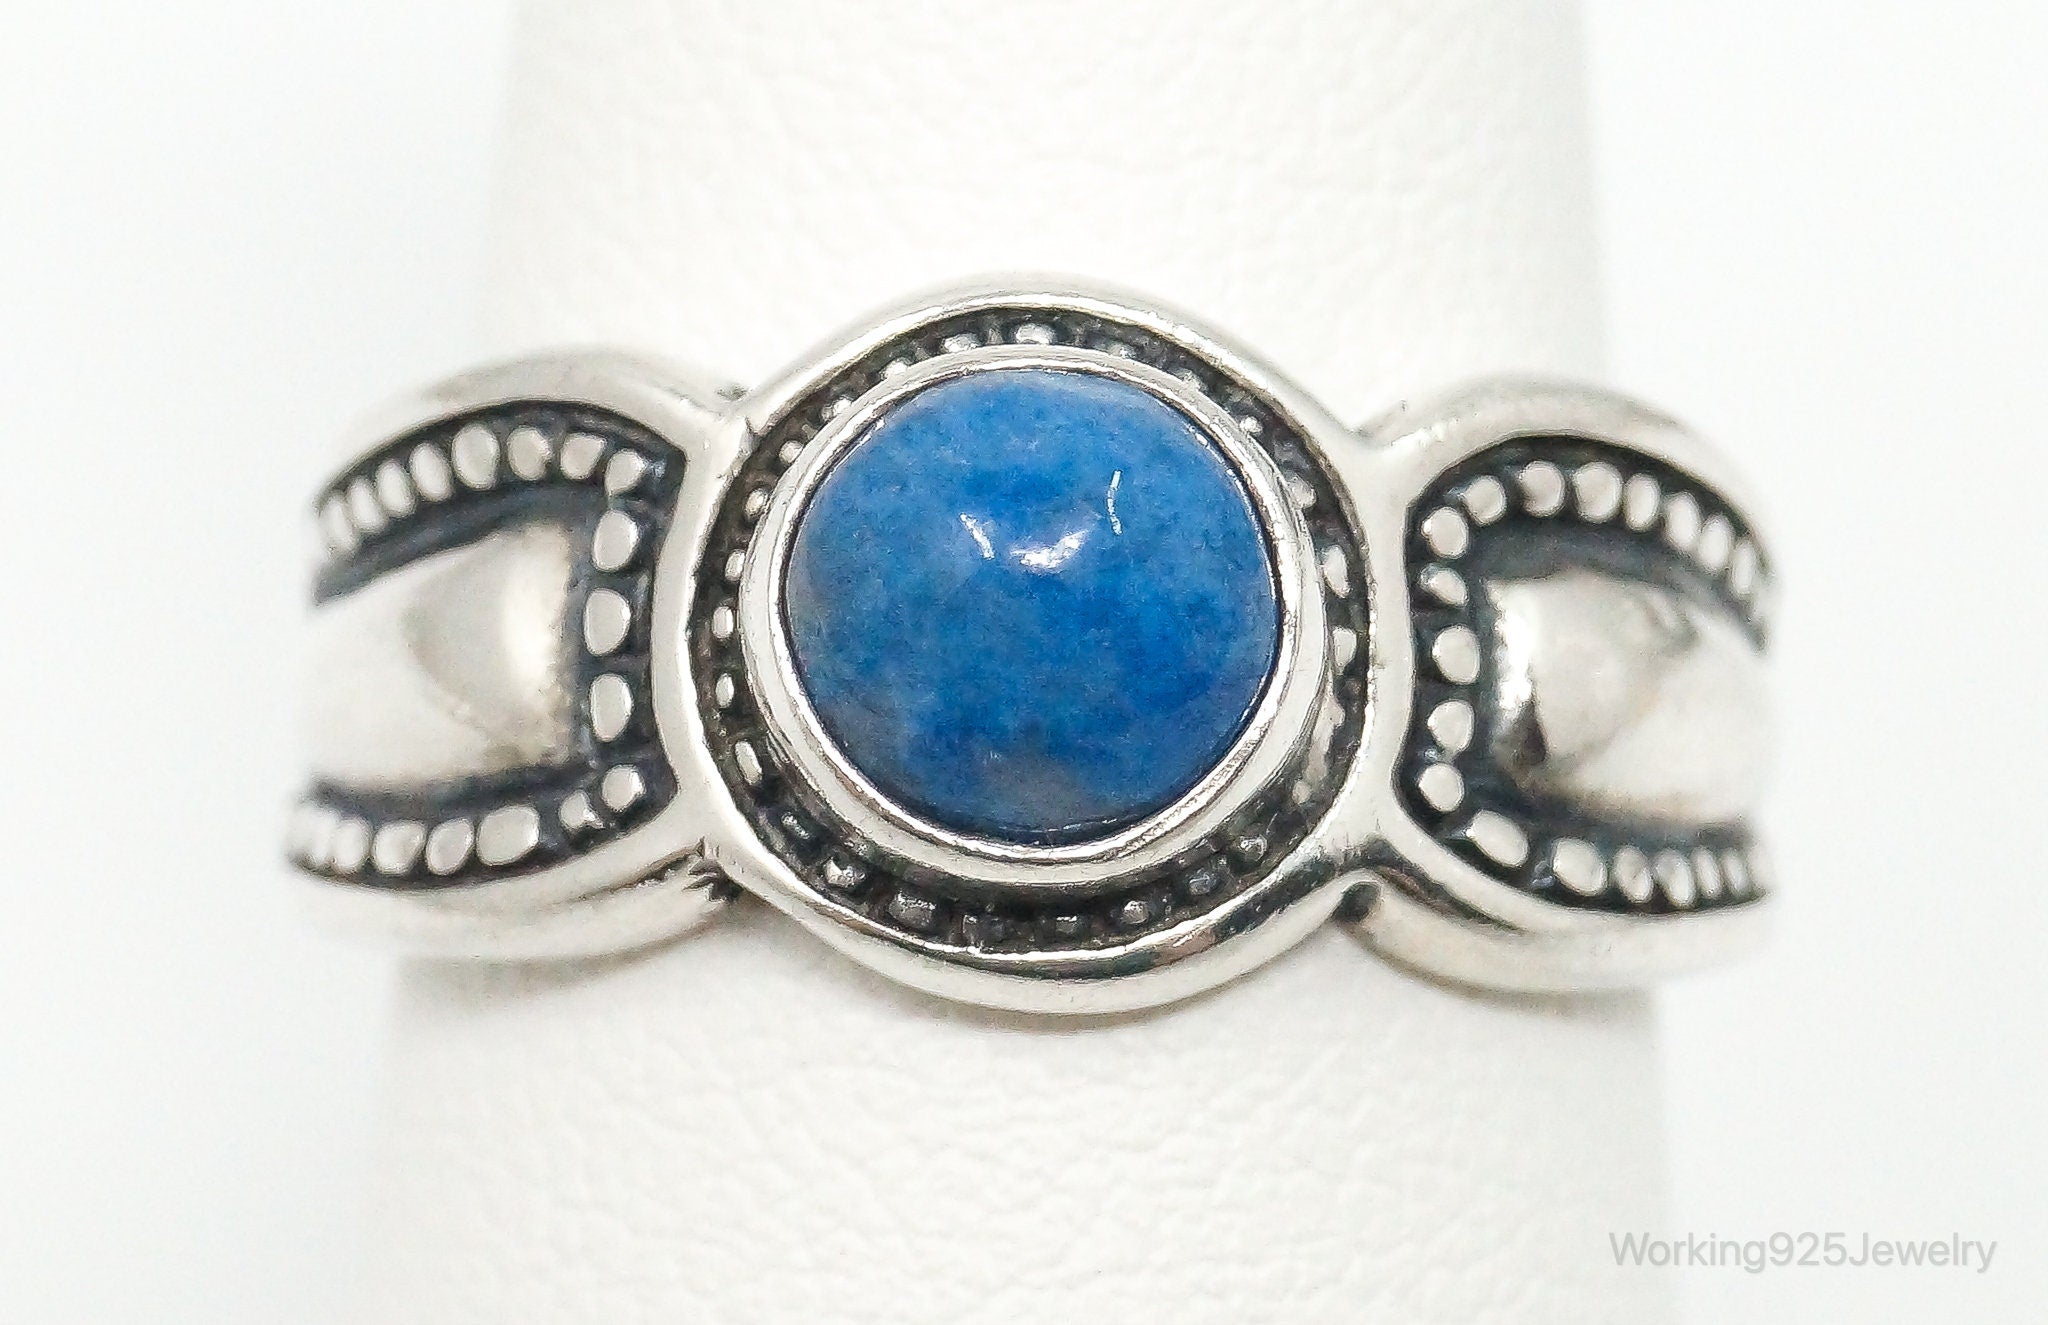 Vintage Southwestern Style Lapis Lazuli Sterling Silver Ring - Size 5.75